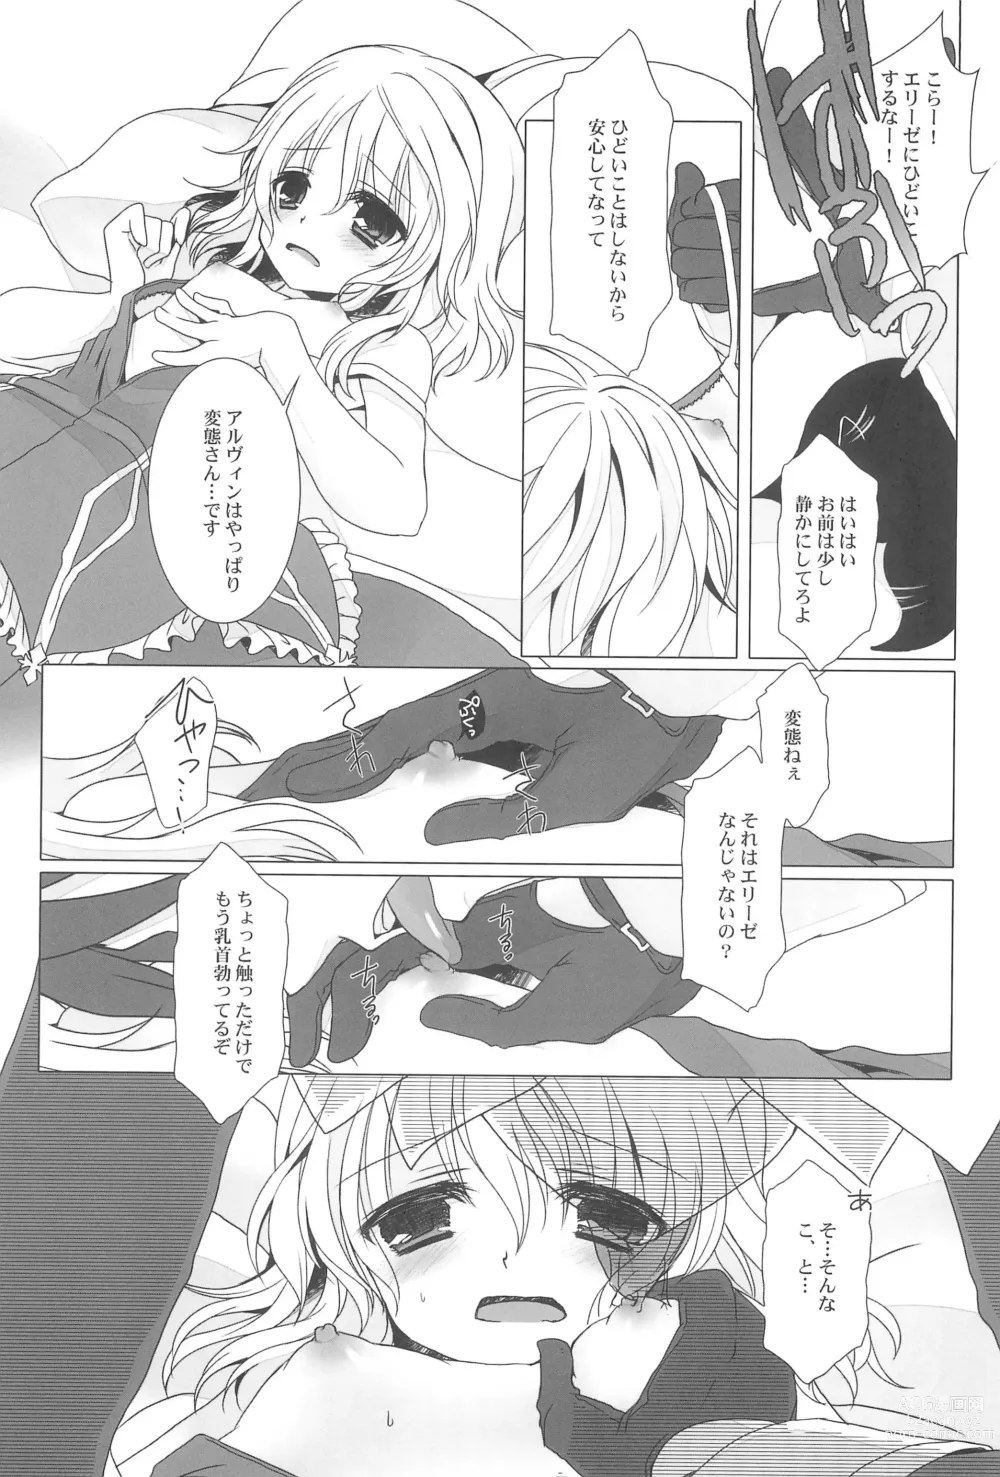 Page 9 of doujinshi LIARxLIAR